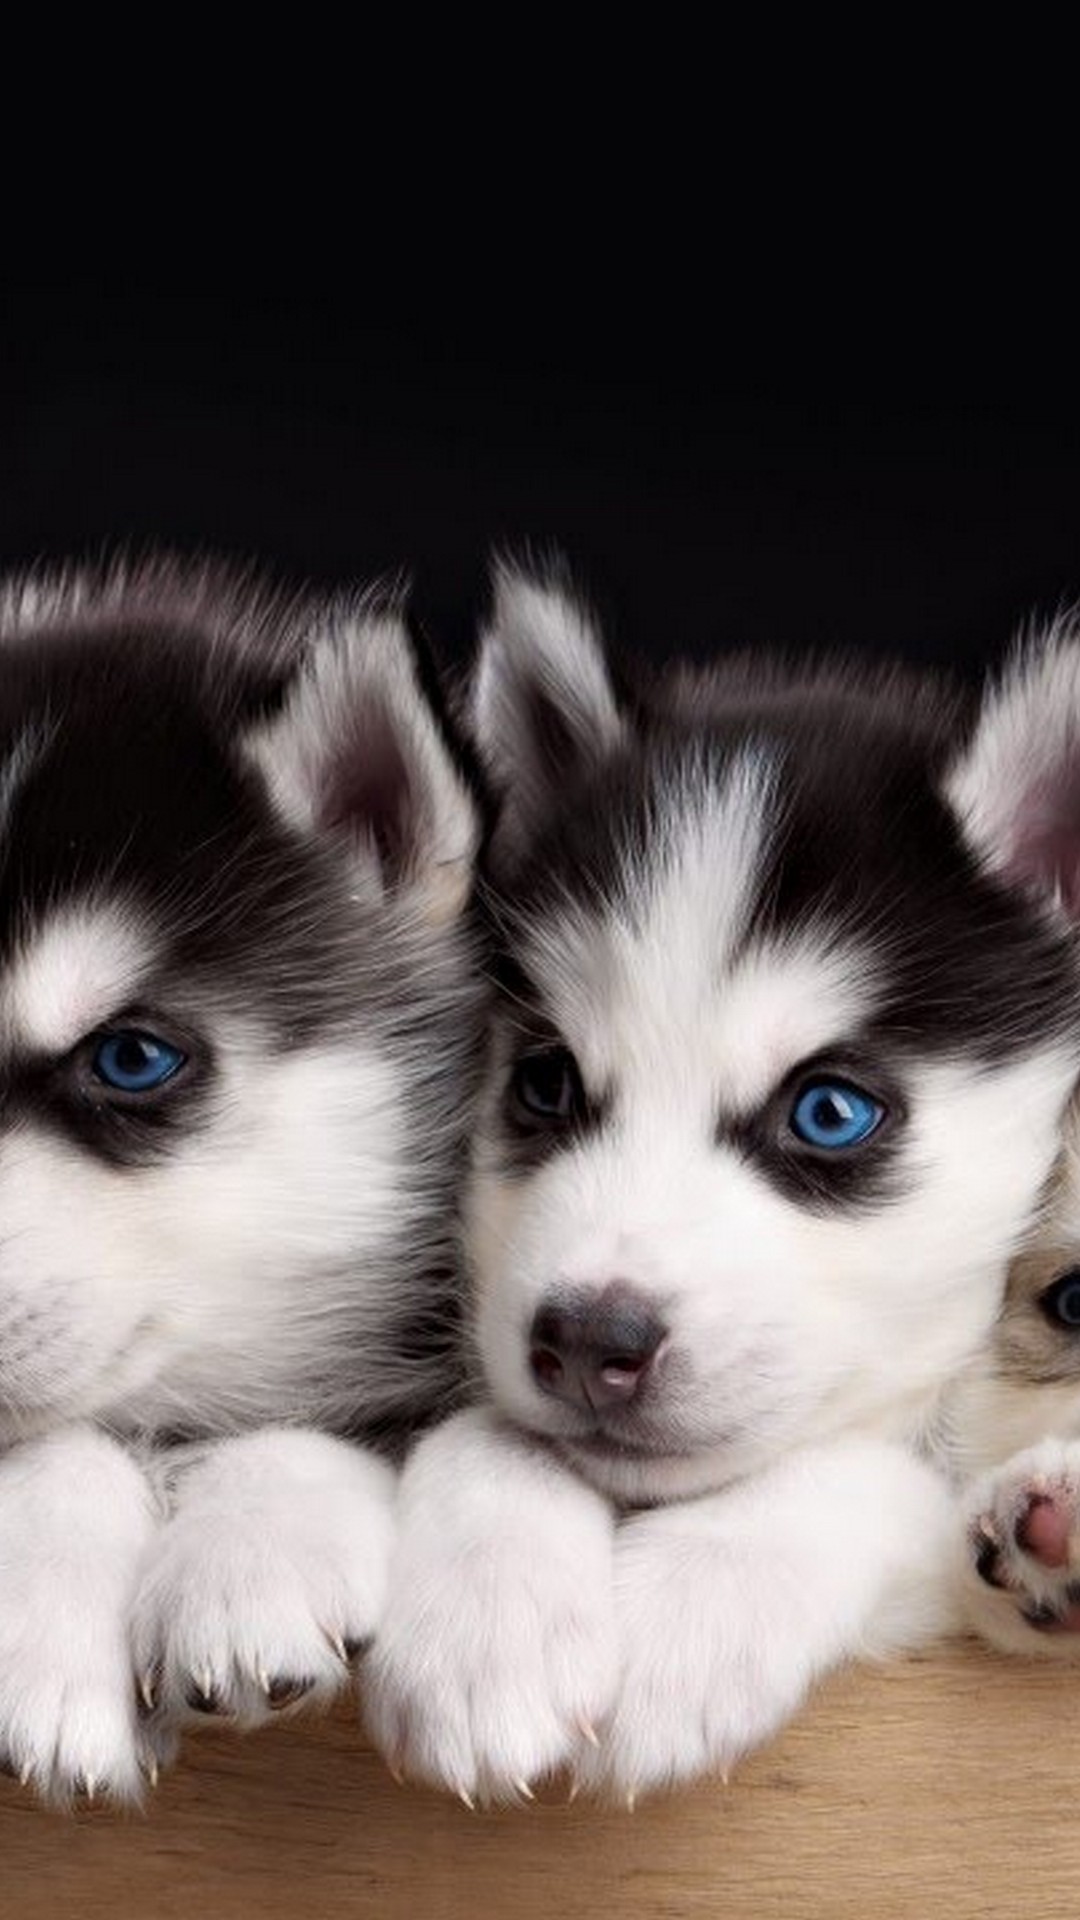 fondos de pantalla de lindos cachorros para móvil,husky siberiano,perro,husky siberiano en miniatura,husky sakhalin,perrito